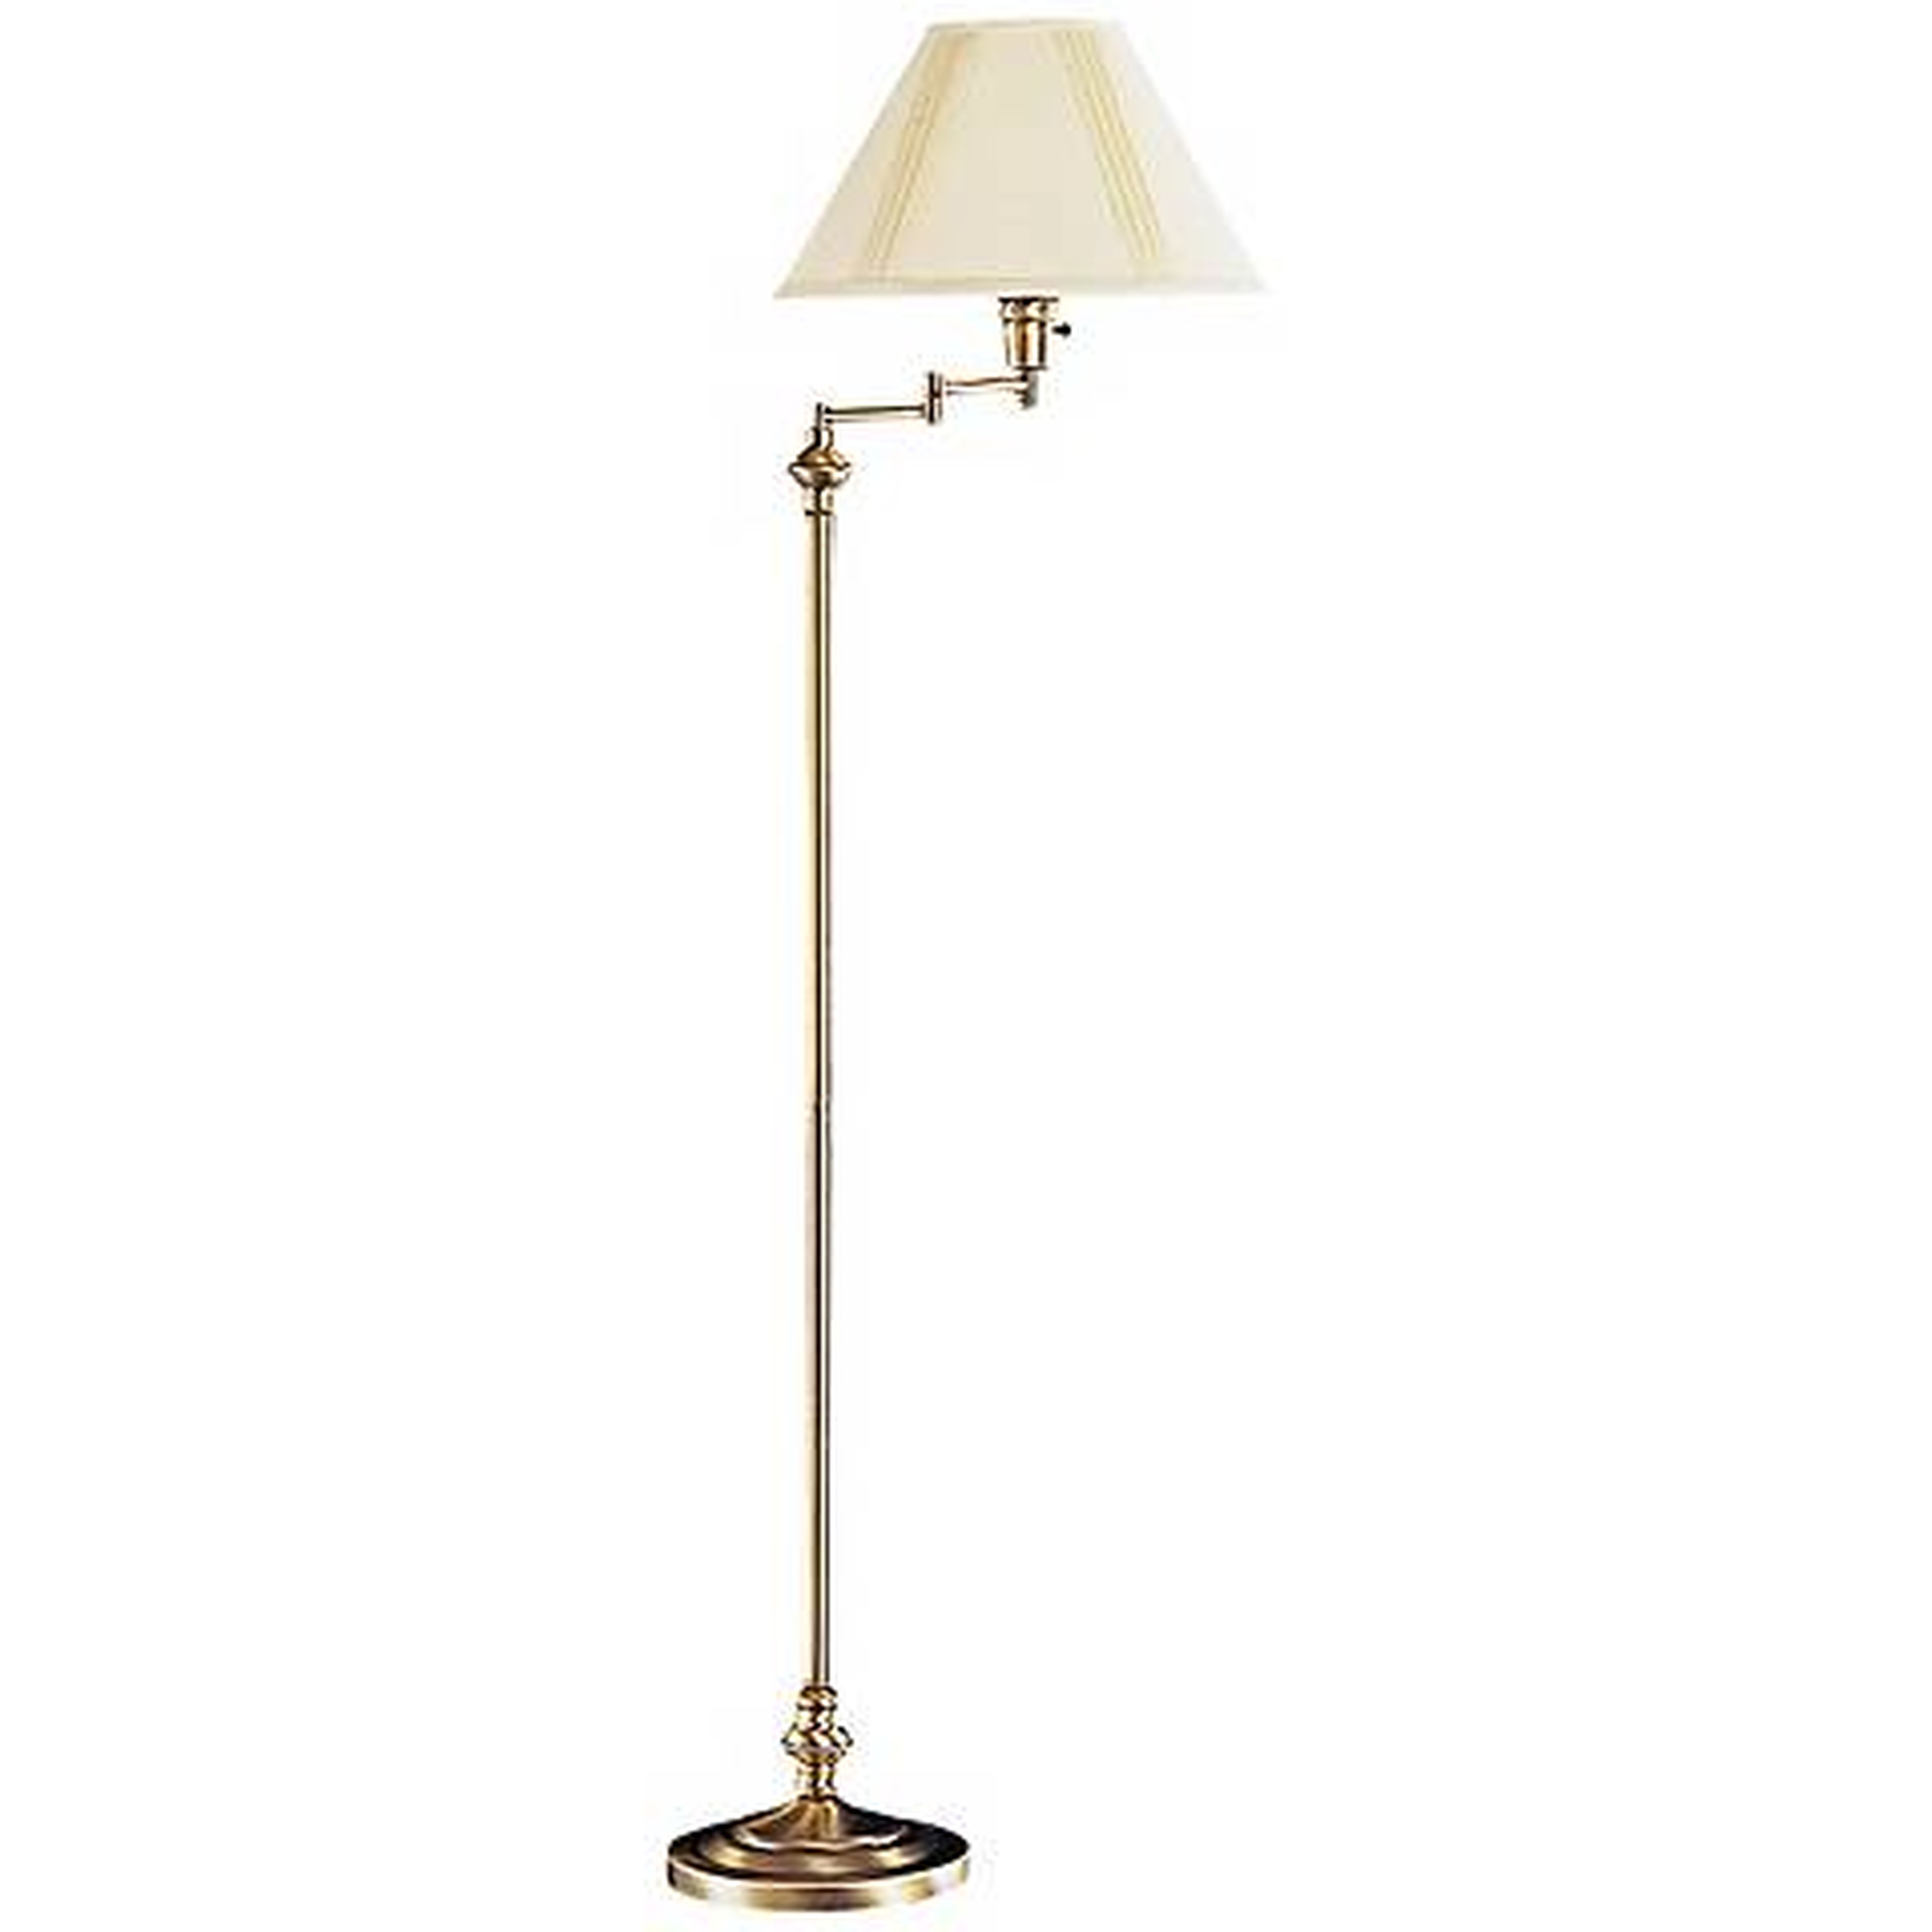 Bellhaven Antique Brass Swing Arm Floor Lamp - Lamps Plus